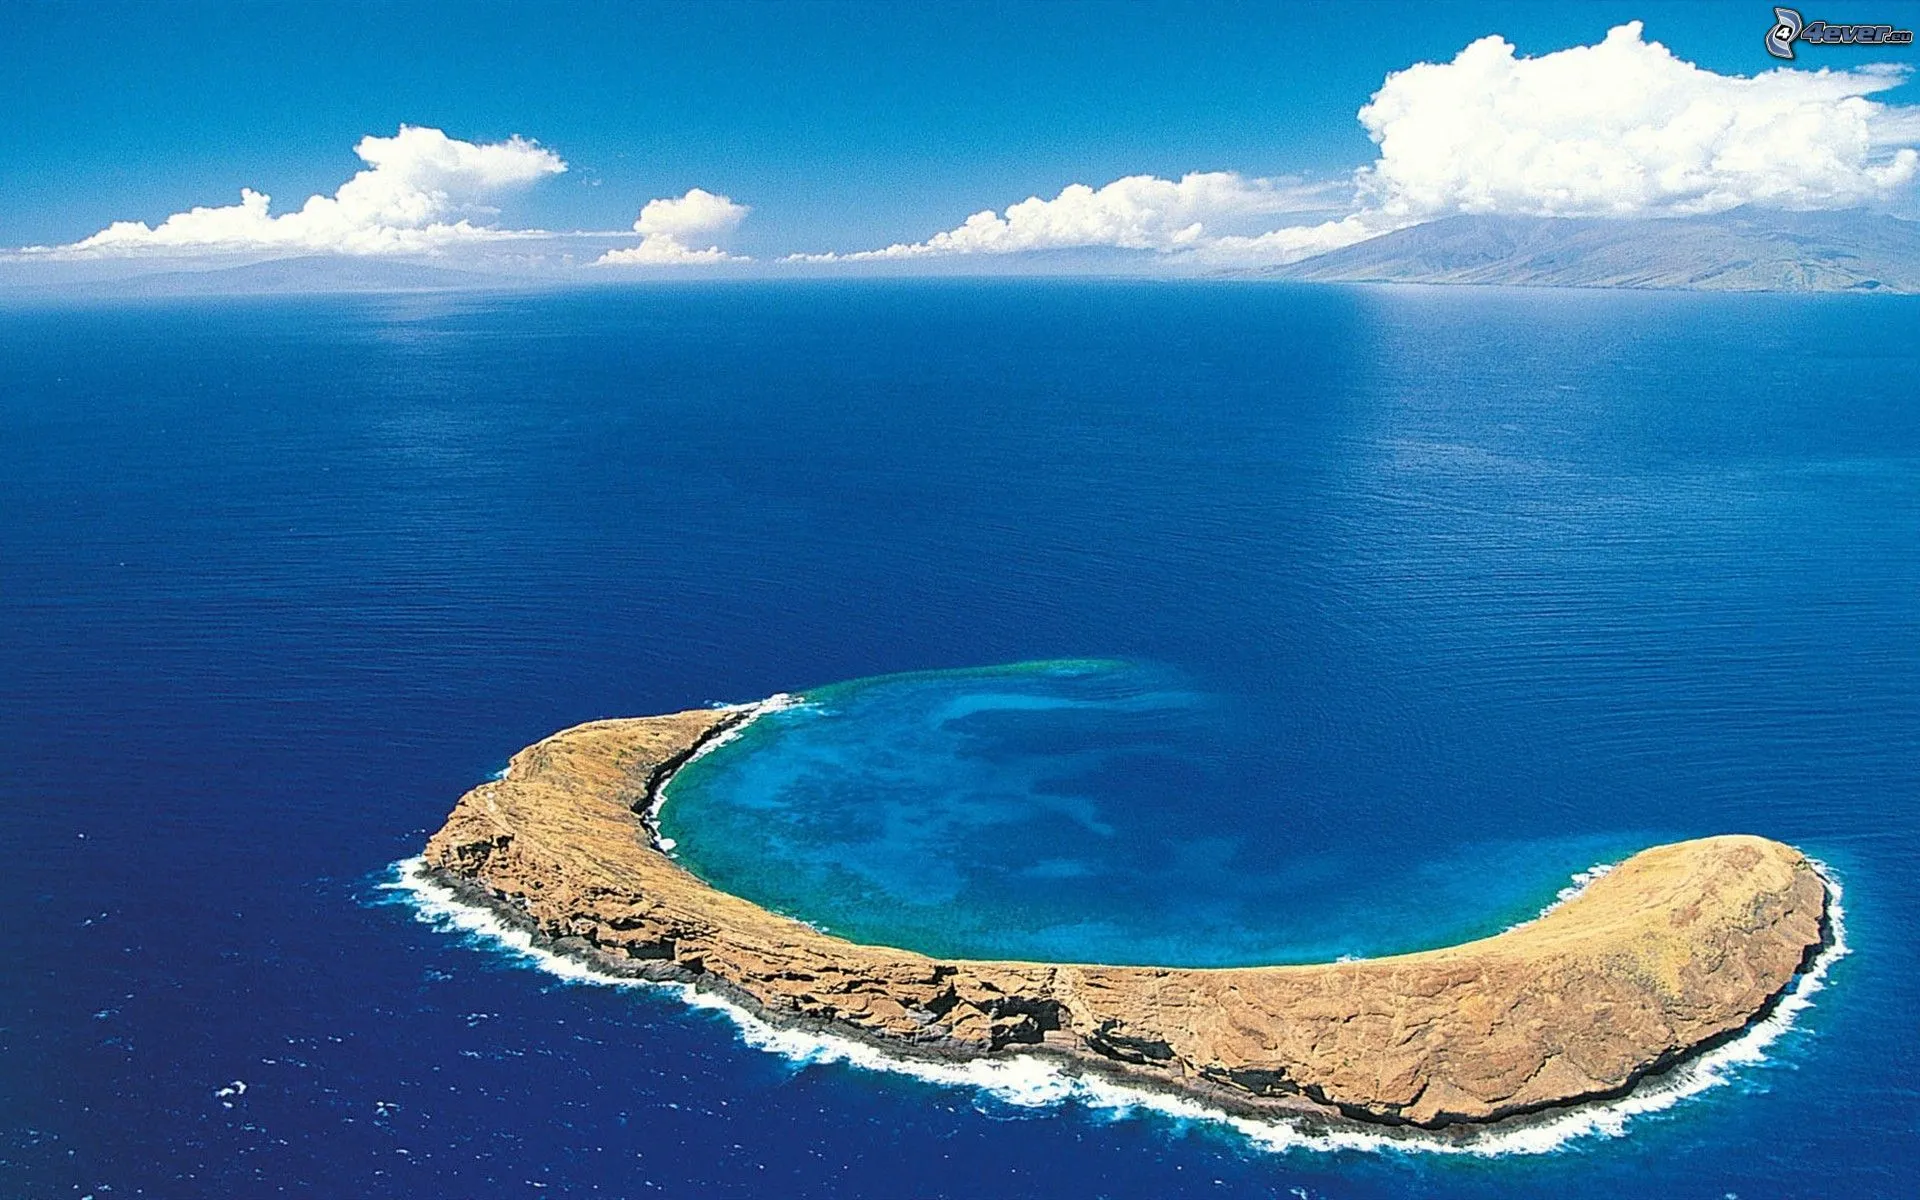 Volcanic Islands and Archipelagos